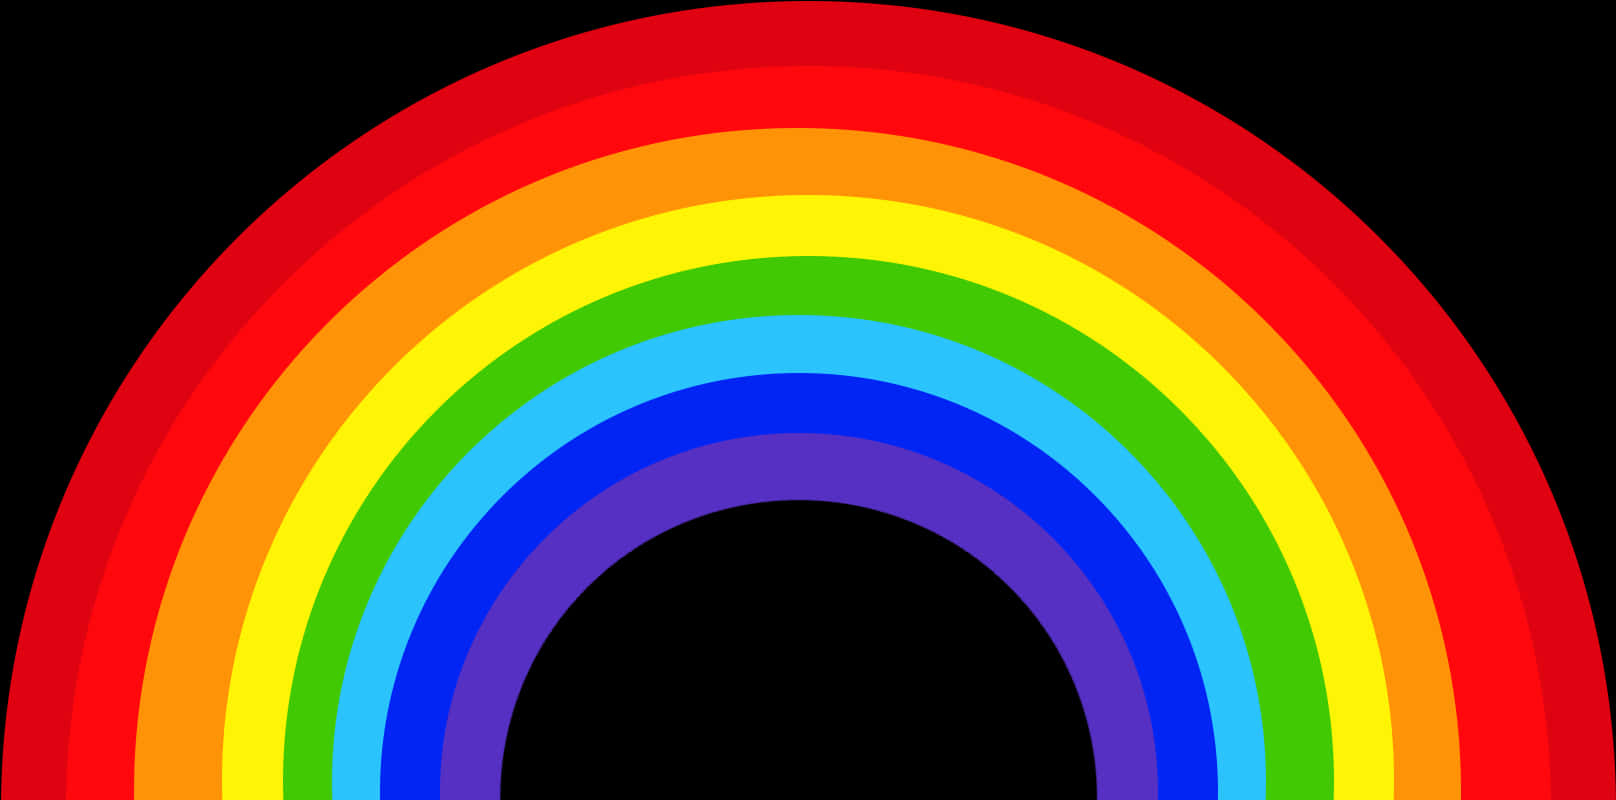 Vibrant Rainbow Artwork